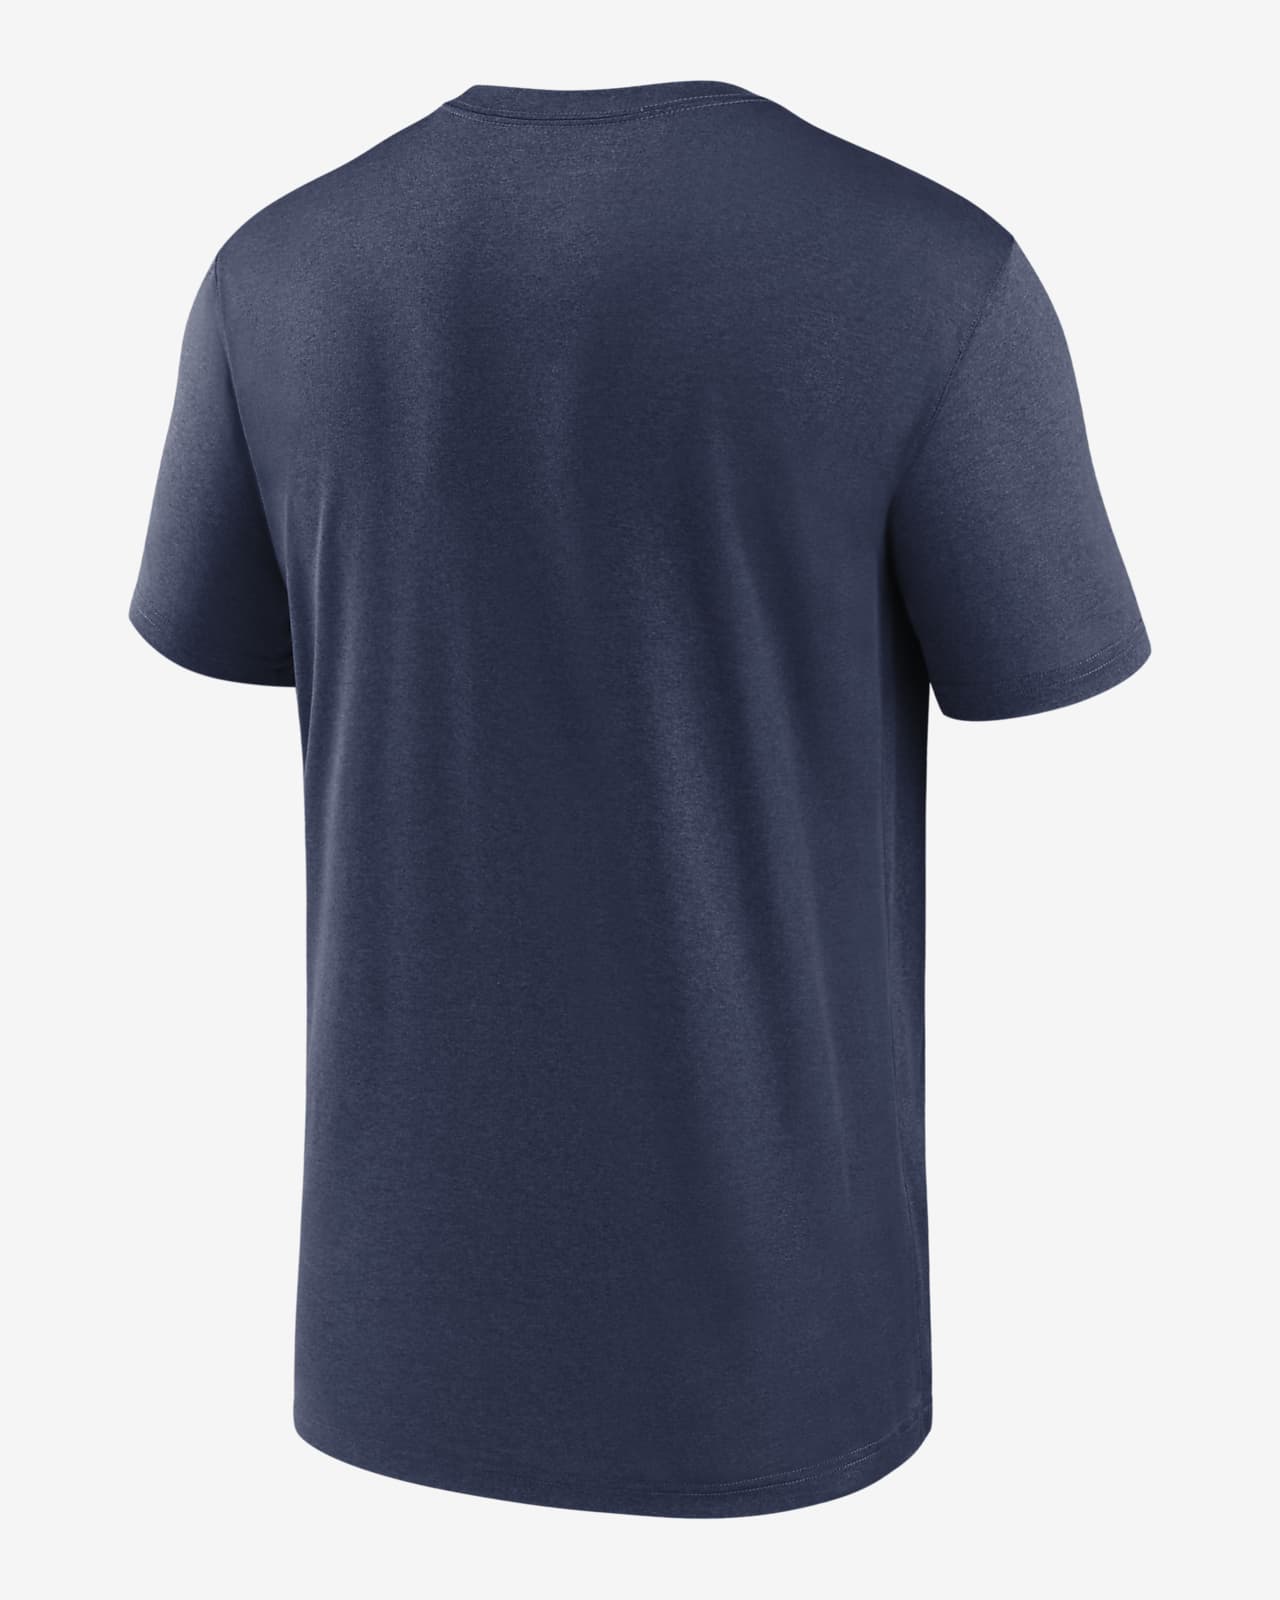 Blue Nike MLB Detroit Tigers T-Shirt